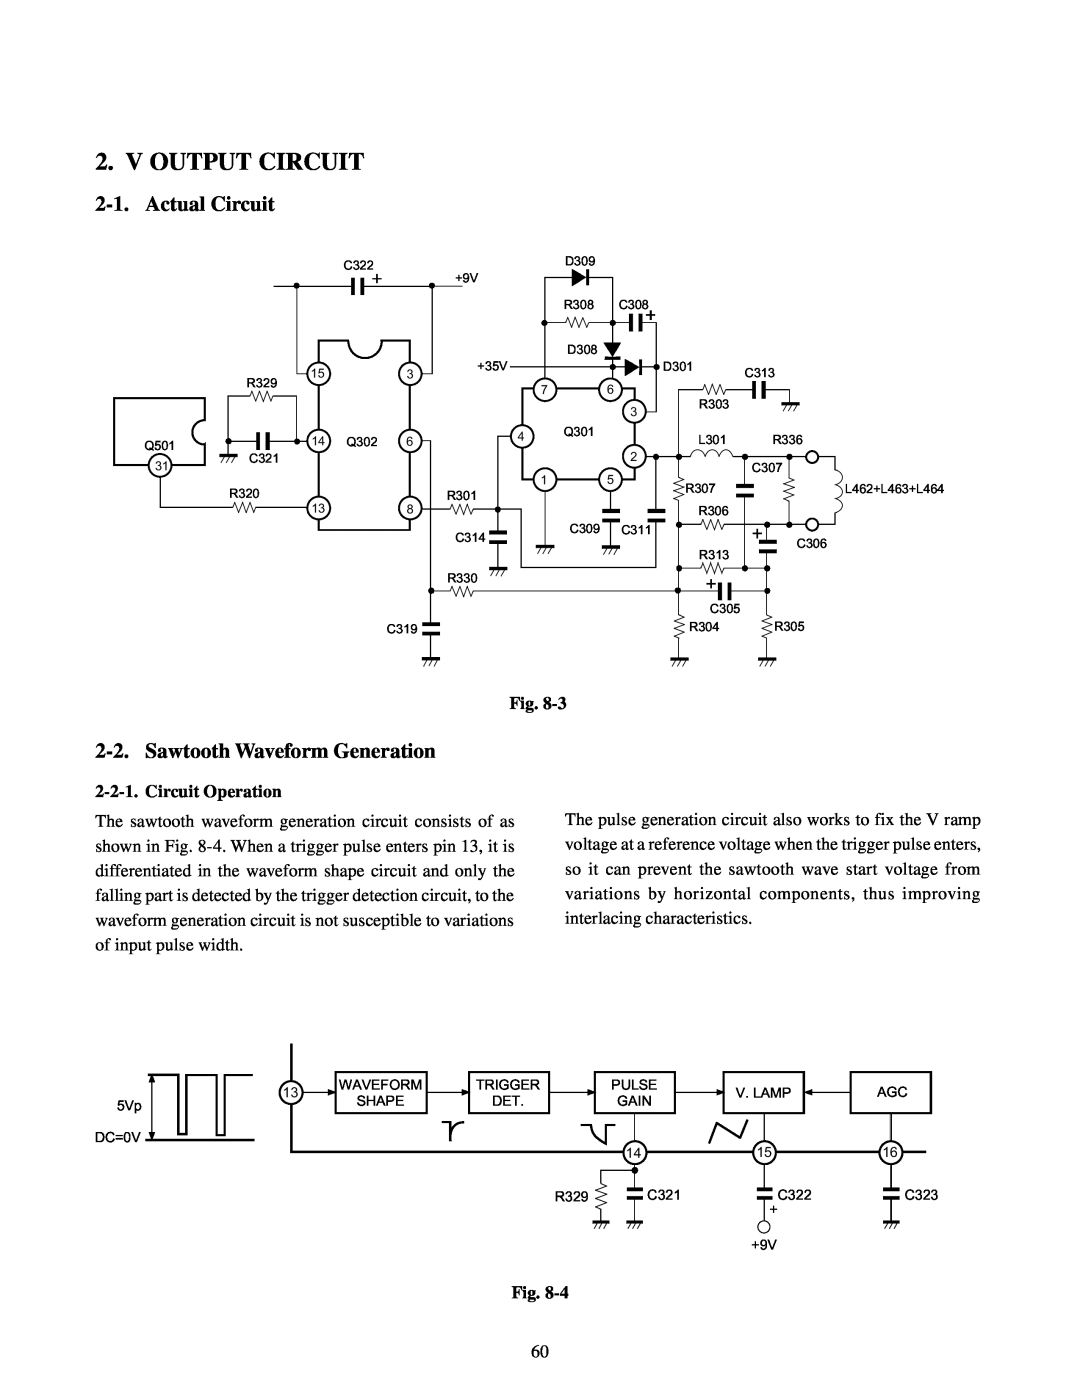 Toshiba TW40F80 manual V Output Circuit, Actual Circuit, Sawtooth Waveform Generation, Circuit Operation 